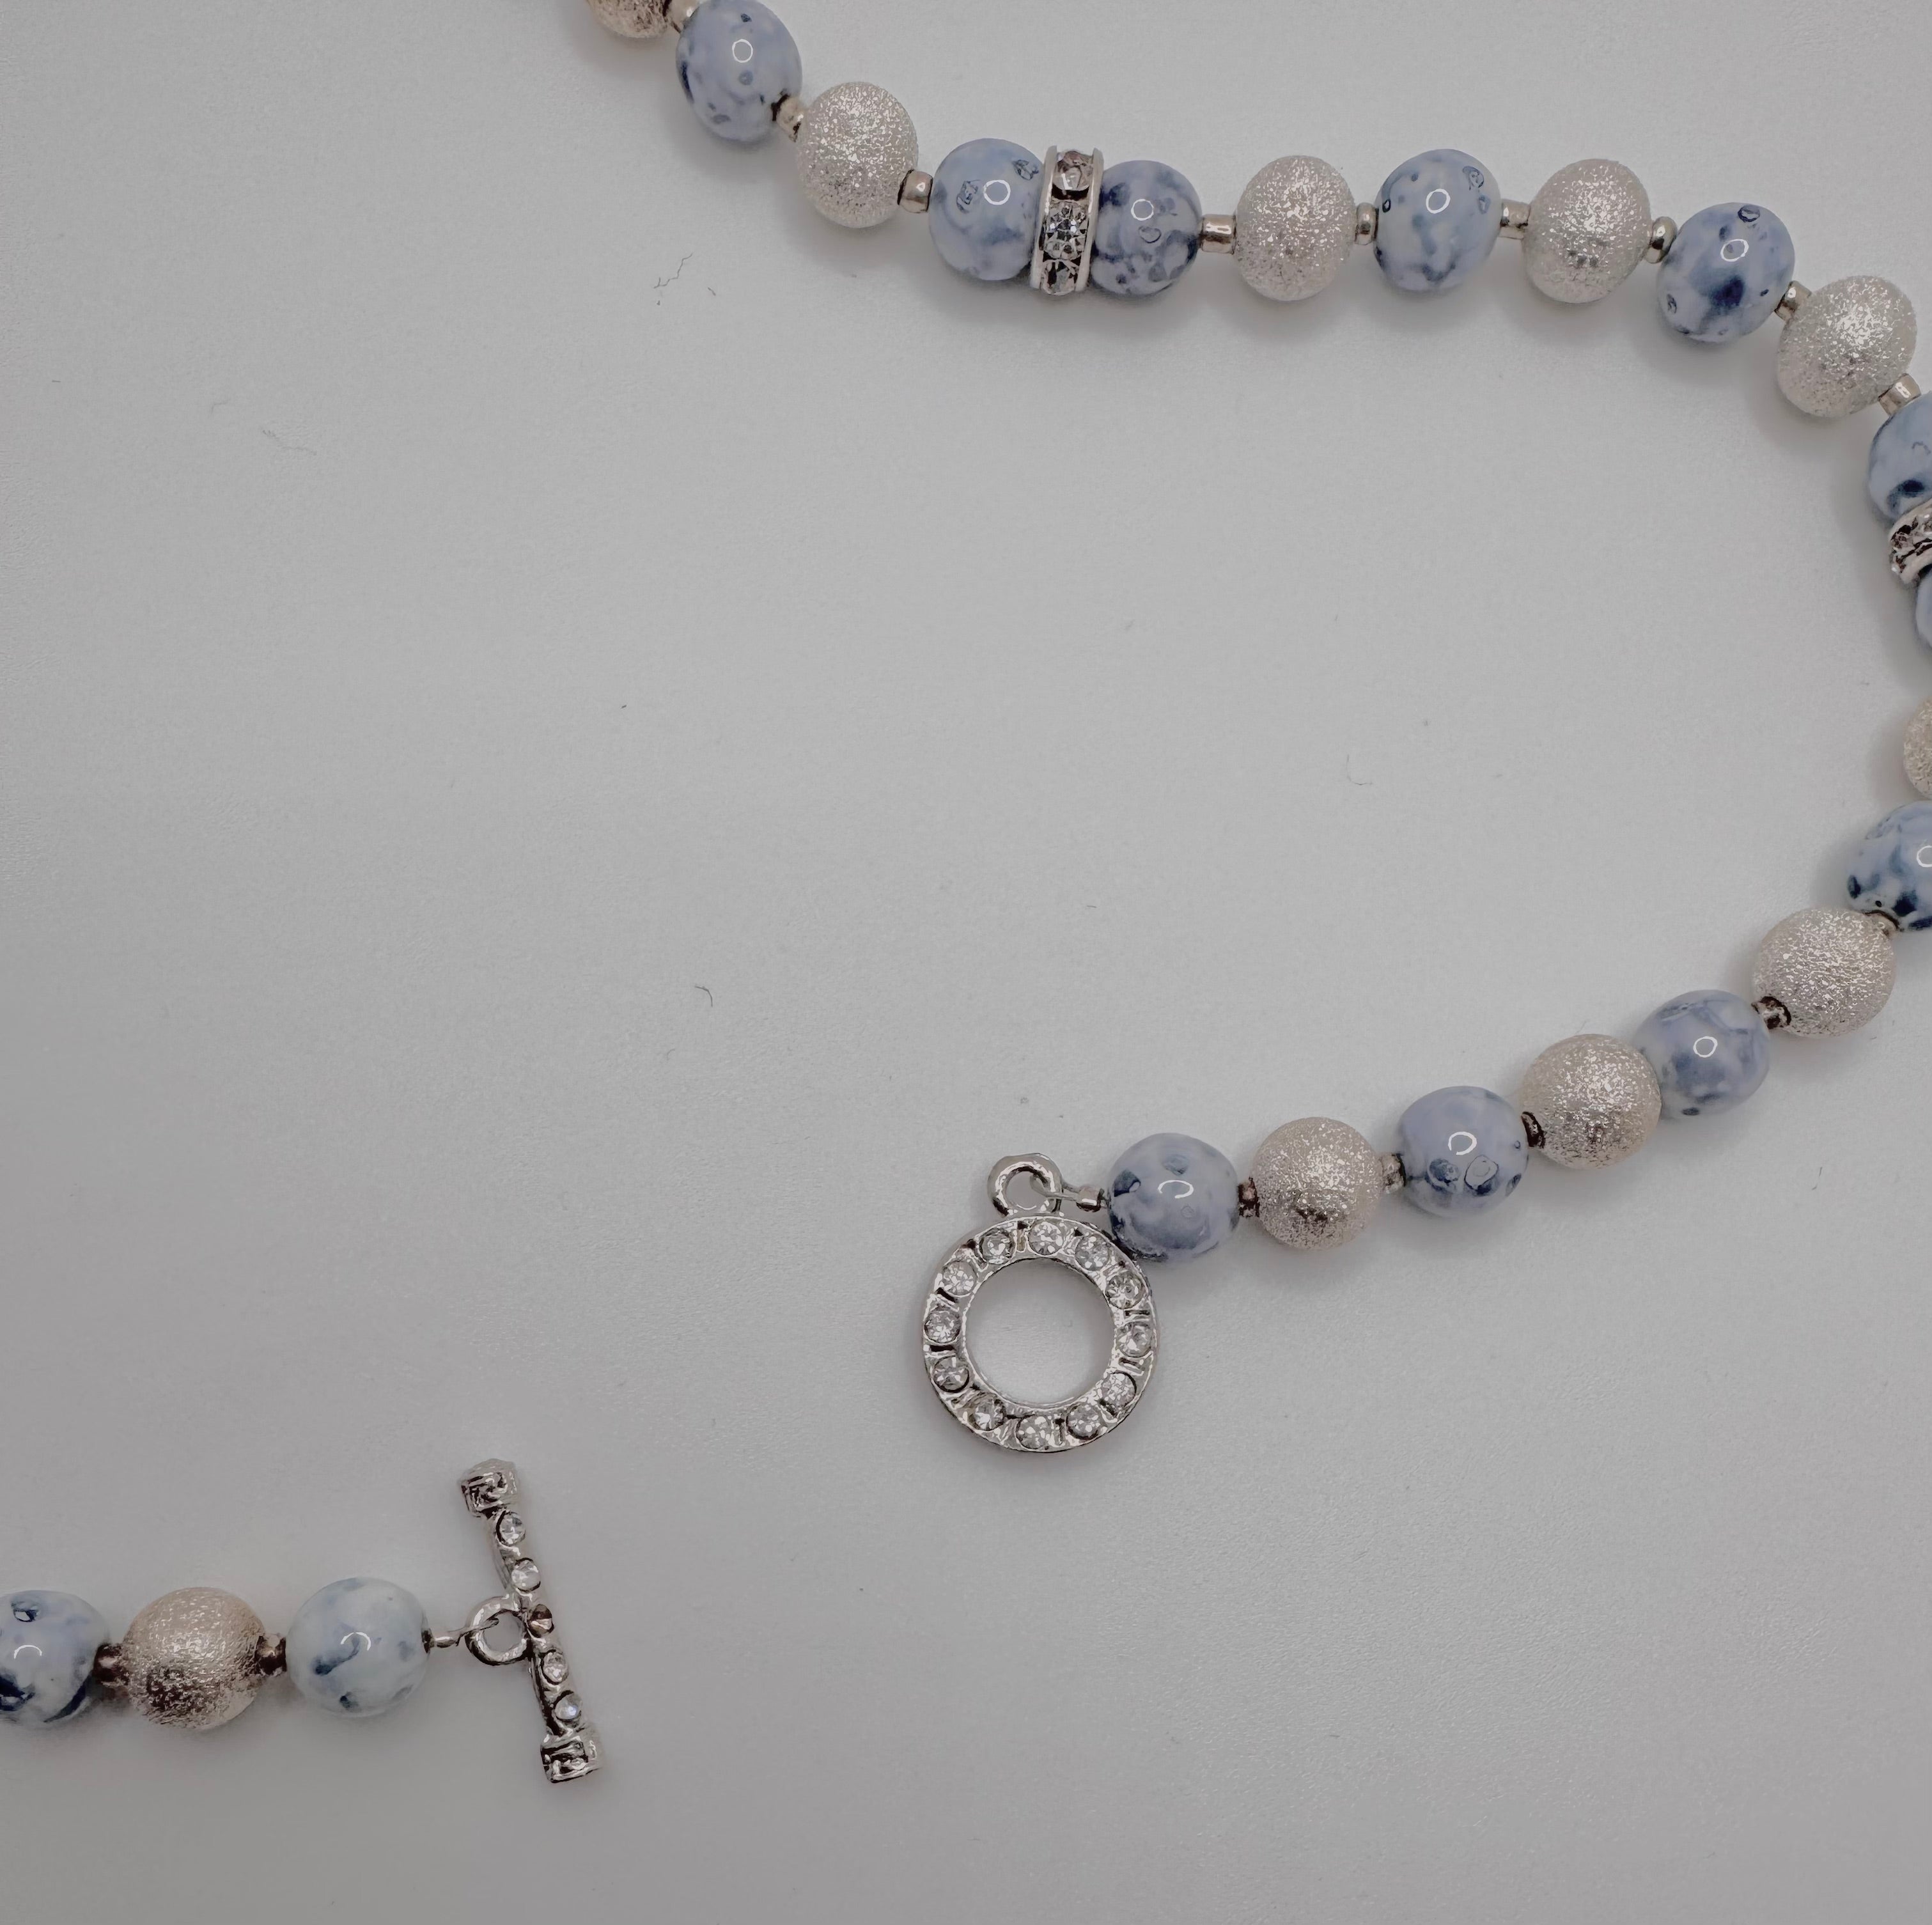 Handmade Ceramic Beads & Silver Tone Necklace - Blue/Silver